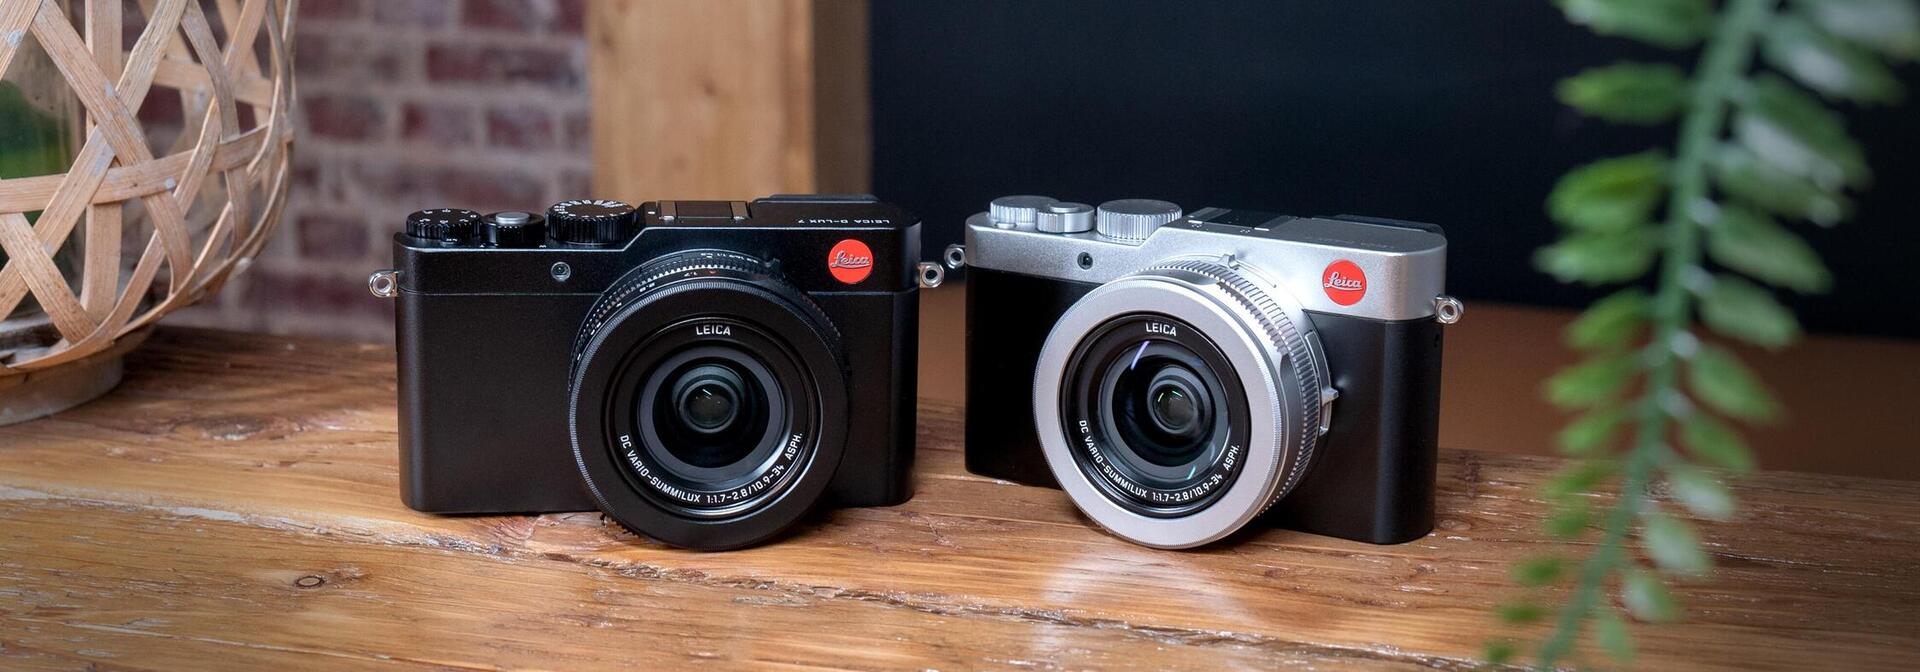 Leica D-LUX7とその他付属品